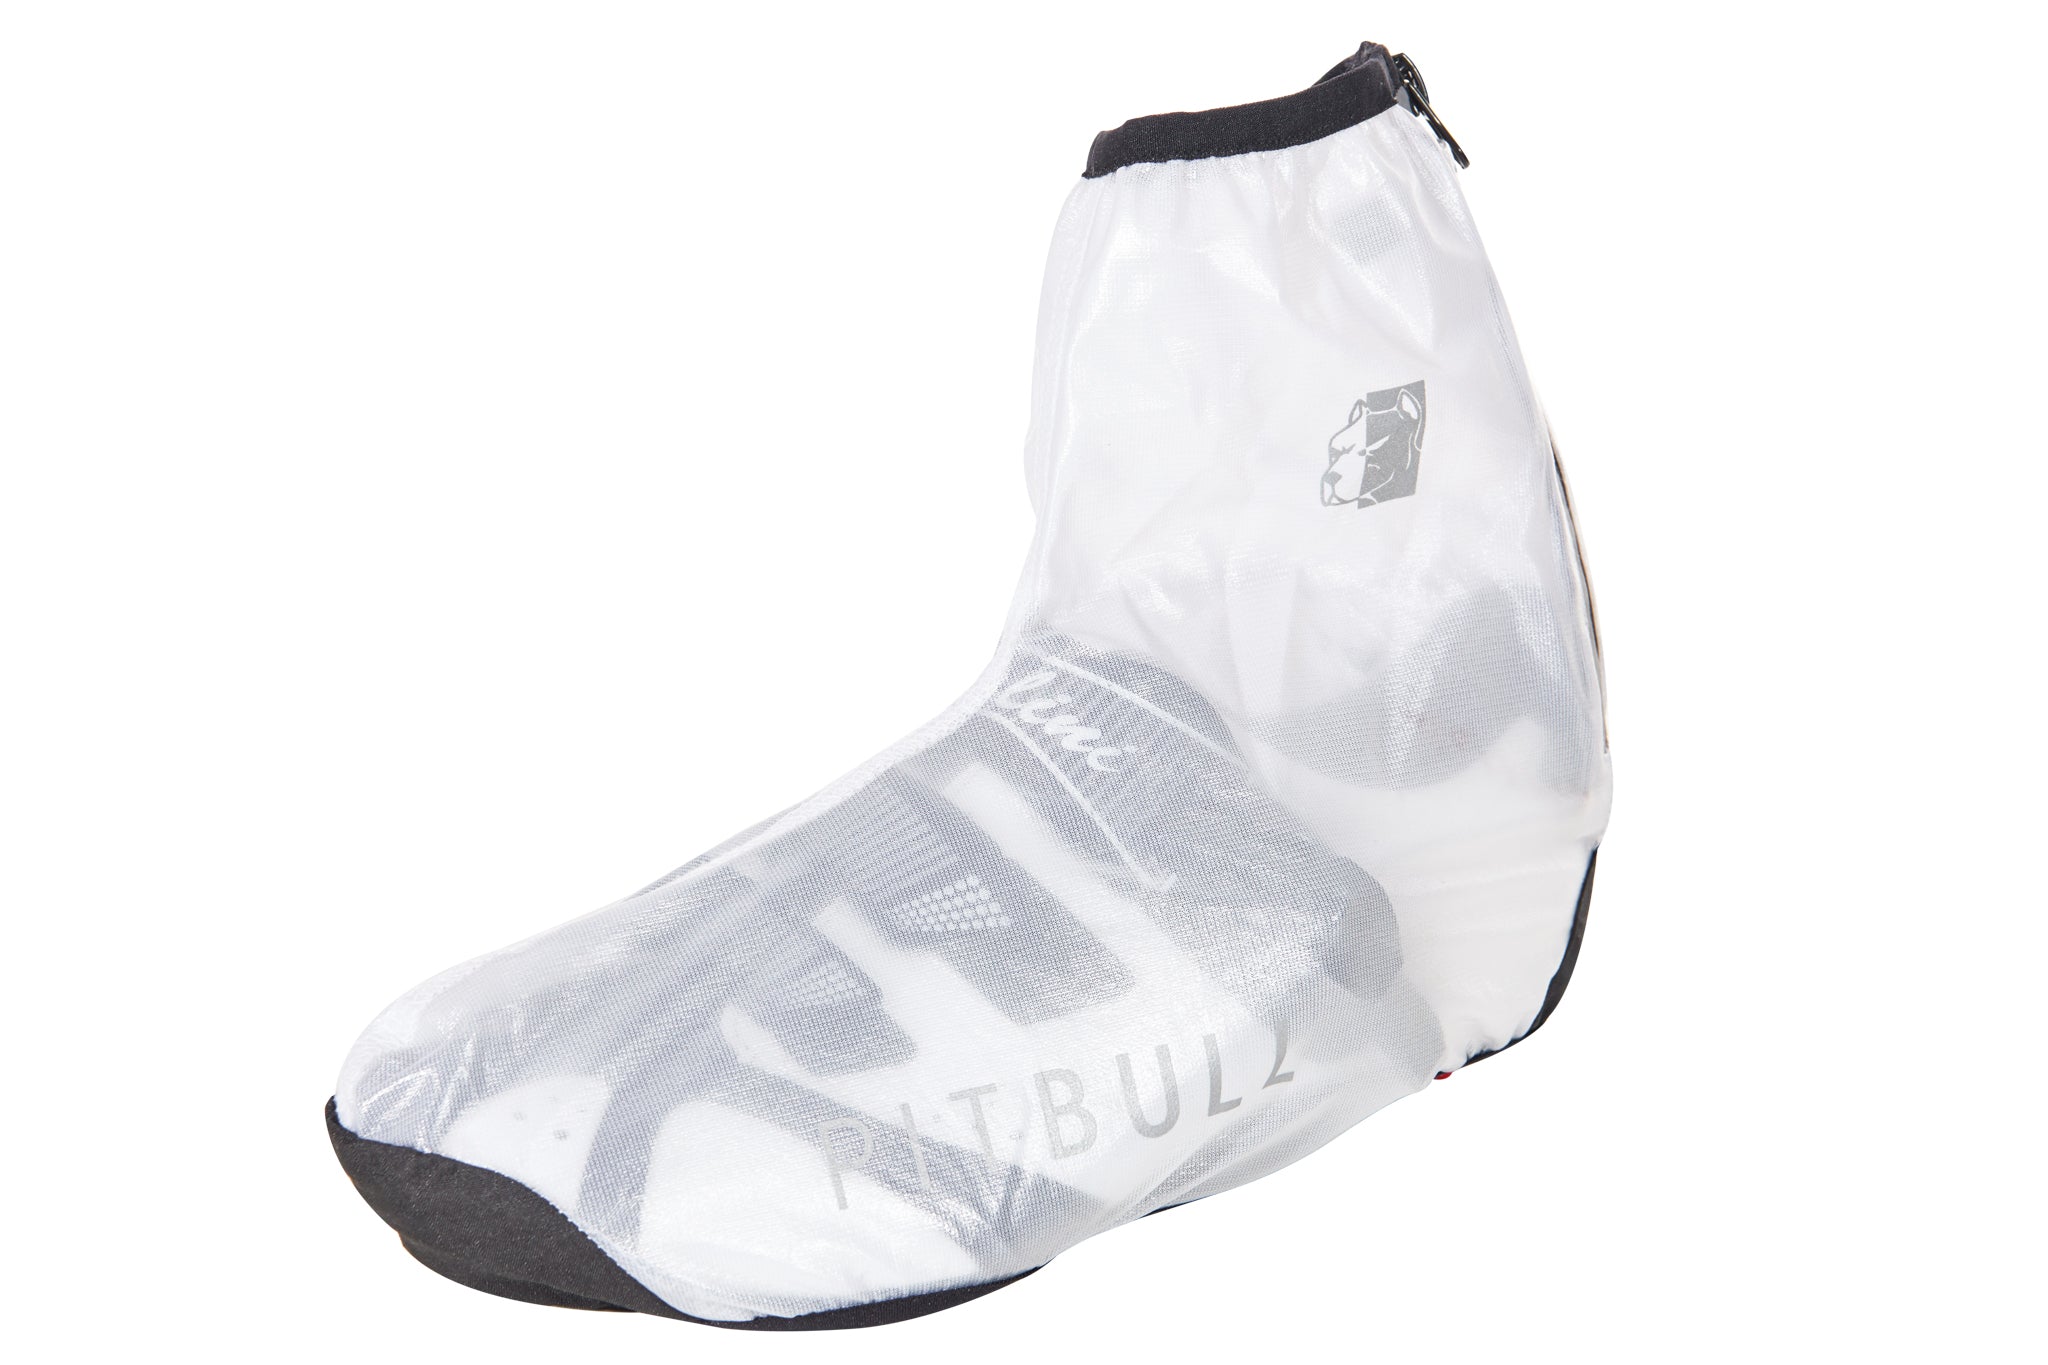 Pitbull Trap Fahrrad Schuhcover Überschuhe Cover Sock wind- wasserfest